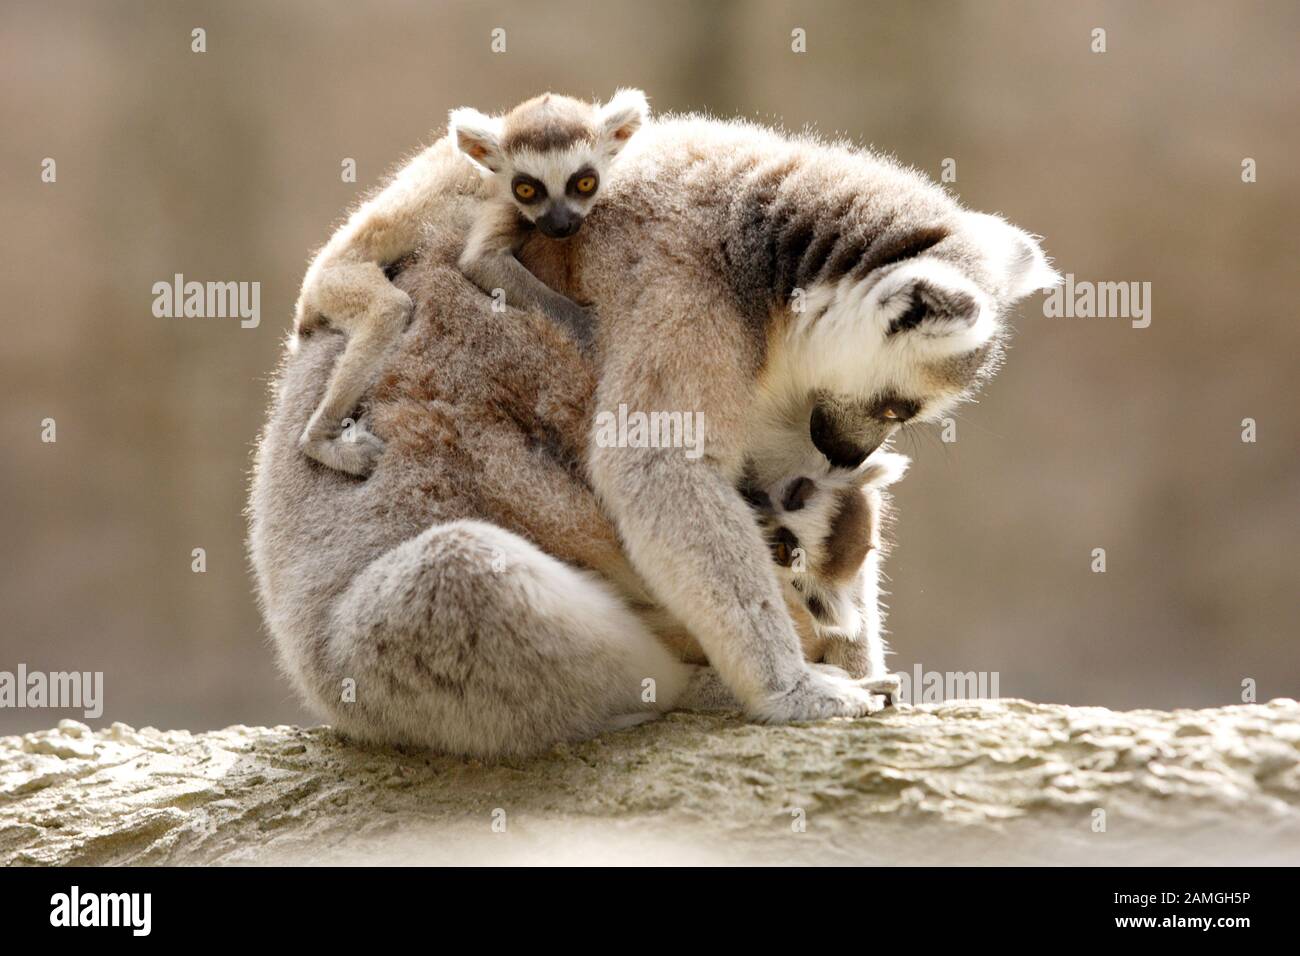 Madre de lémur de cola anillada con dos bebés. Lemur catta, primate estrepsirrrino Foto de stock